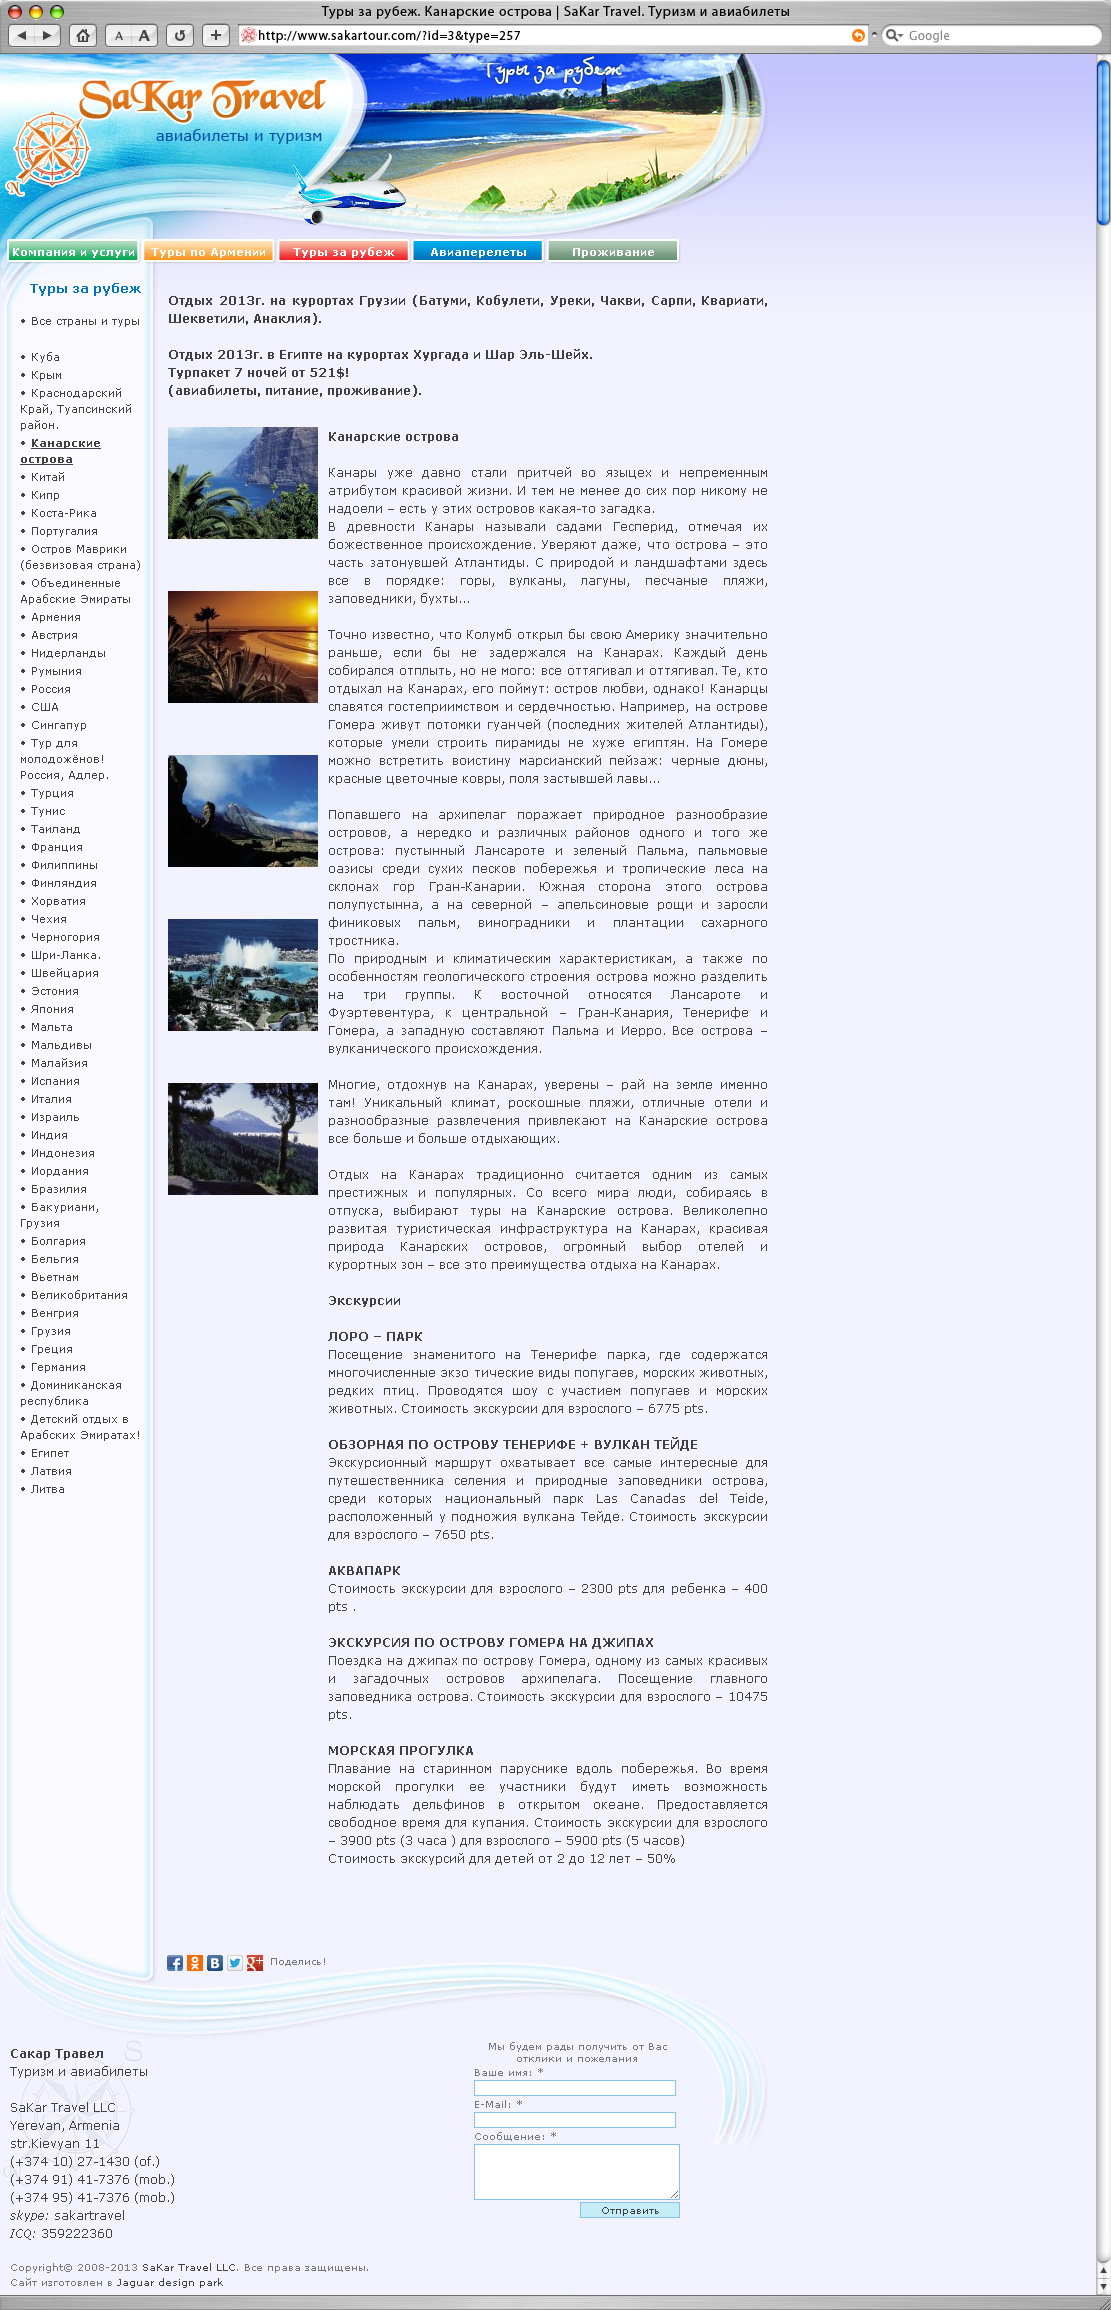 SAKARTOUR.com-"SaKar Travel" Travel Agency